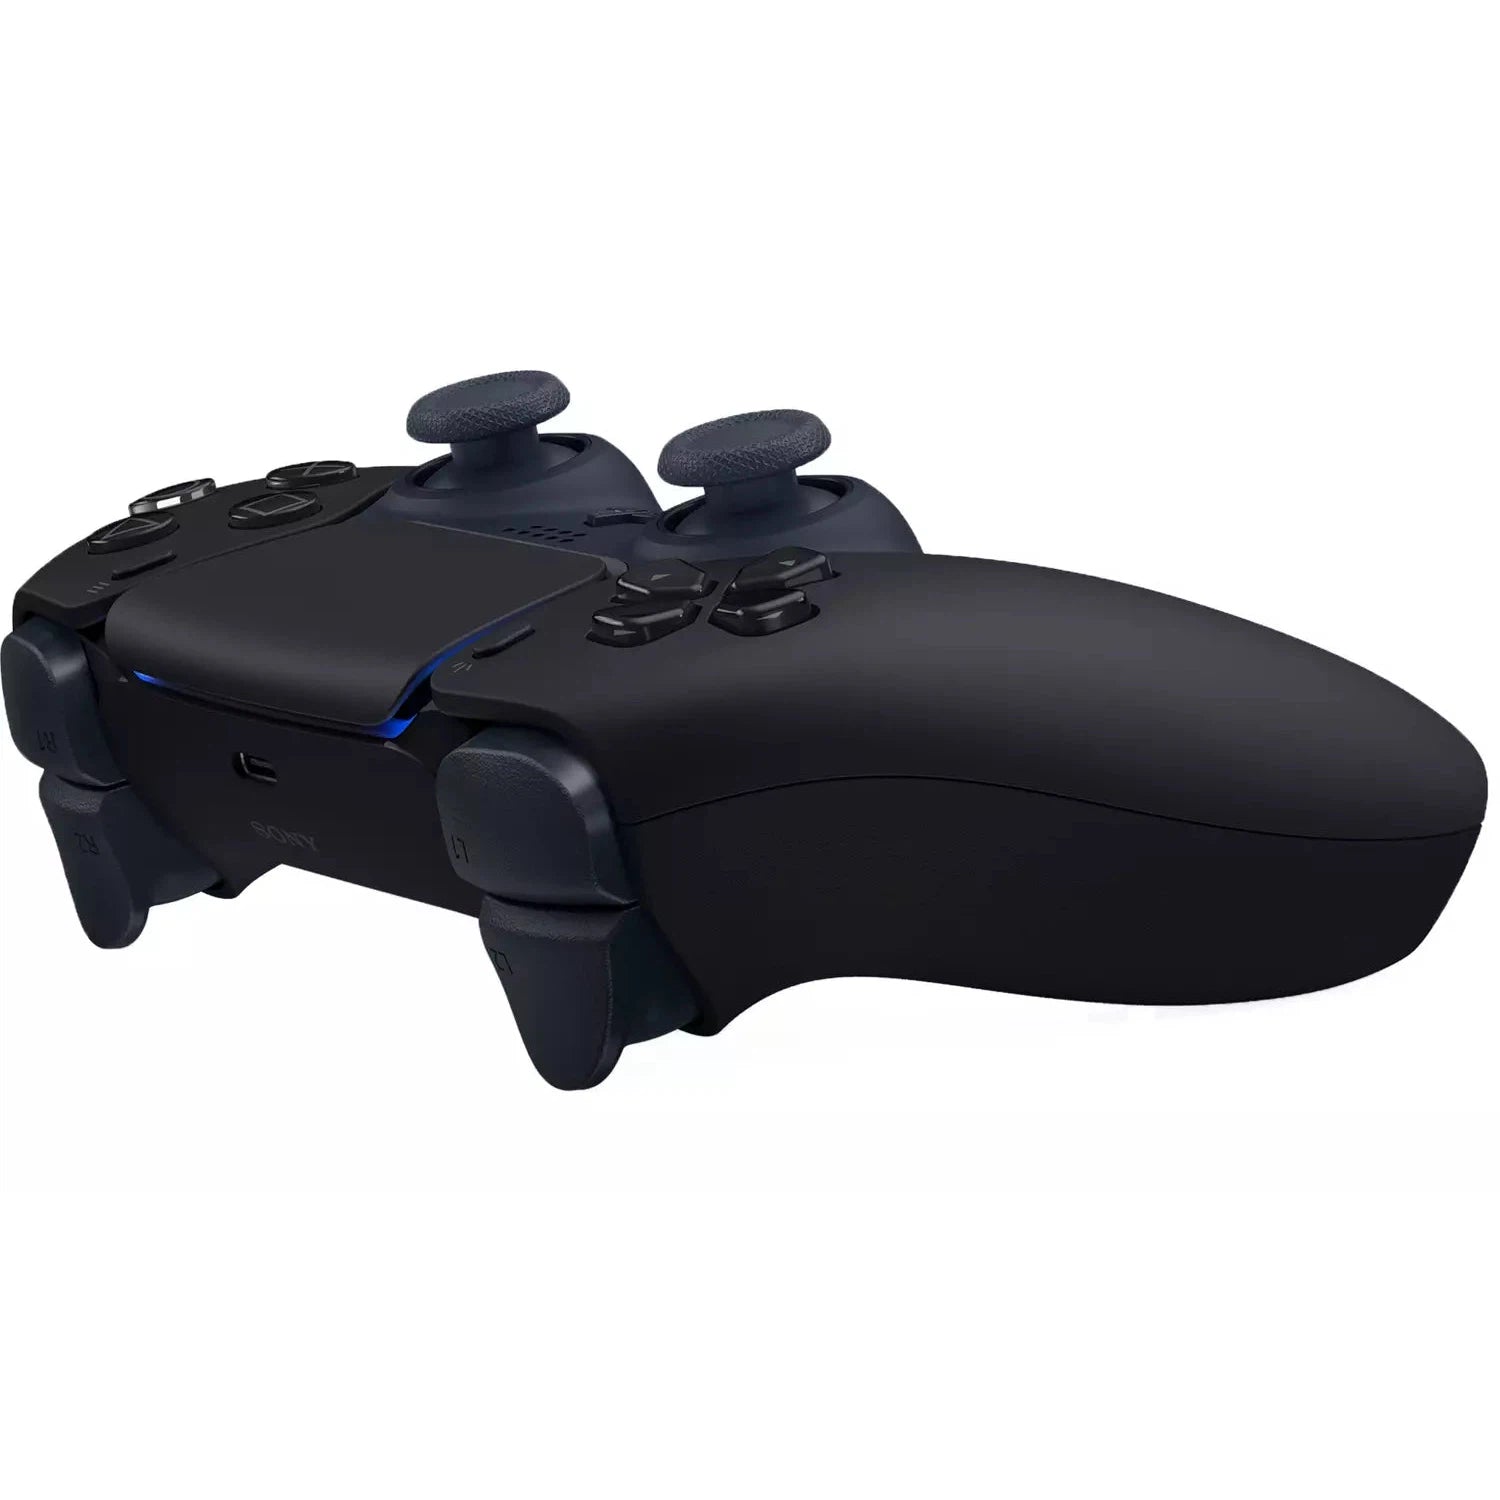 Sony PS5 DualSense Wireless Controller - Black - Refurbished Pristine